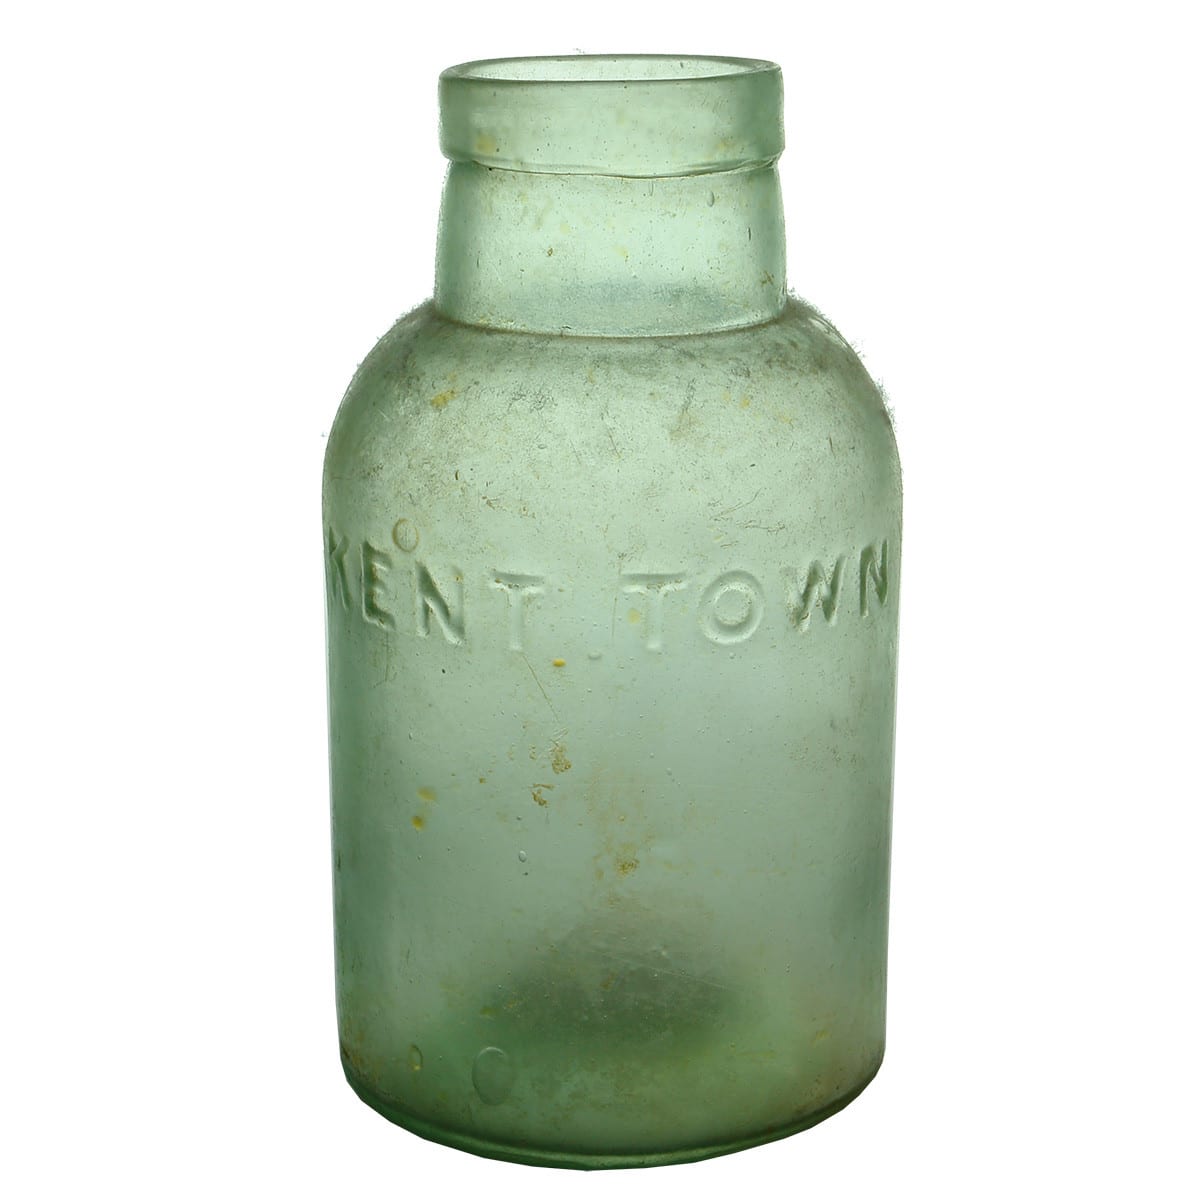 Jam Jar. Kent Town Preserving Co. Aqua. 2 Pound. (South Australia)